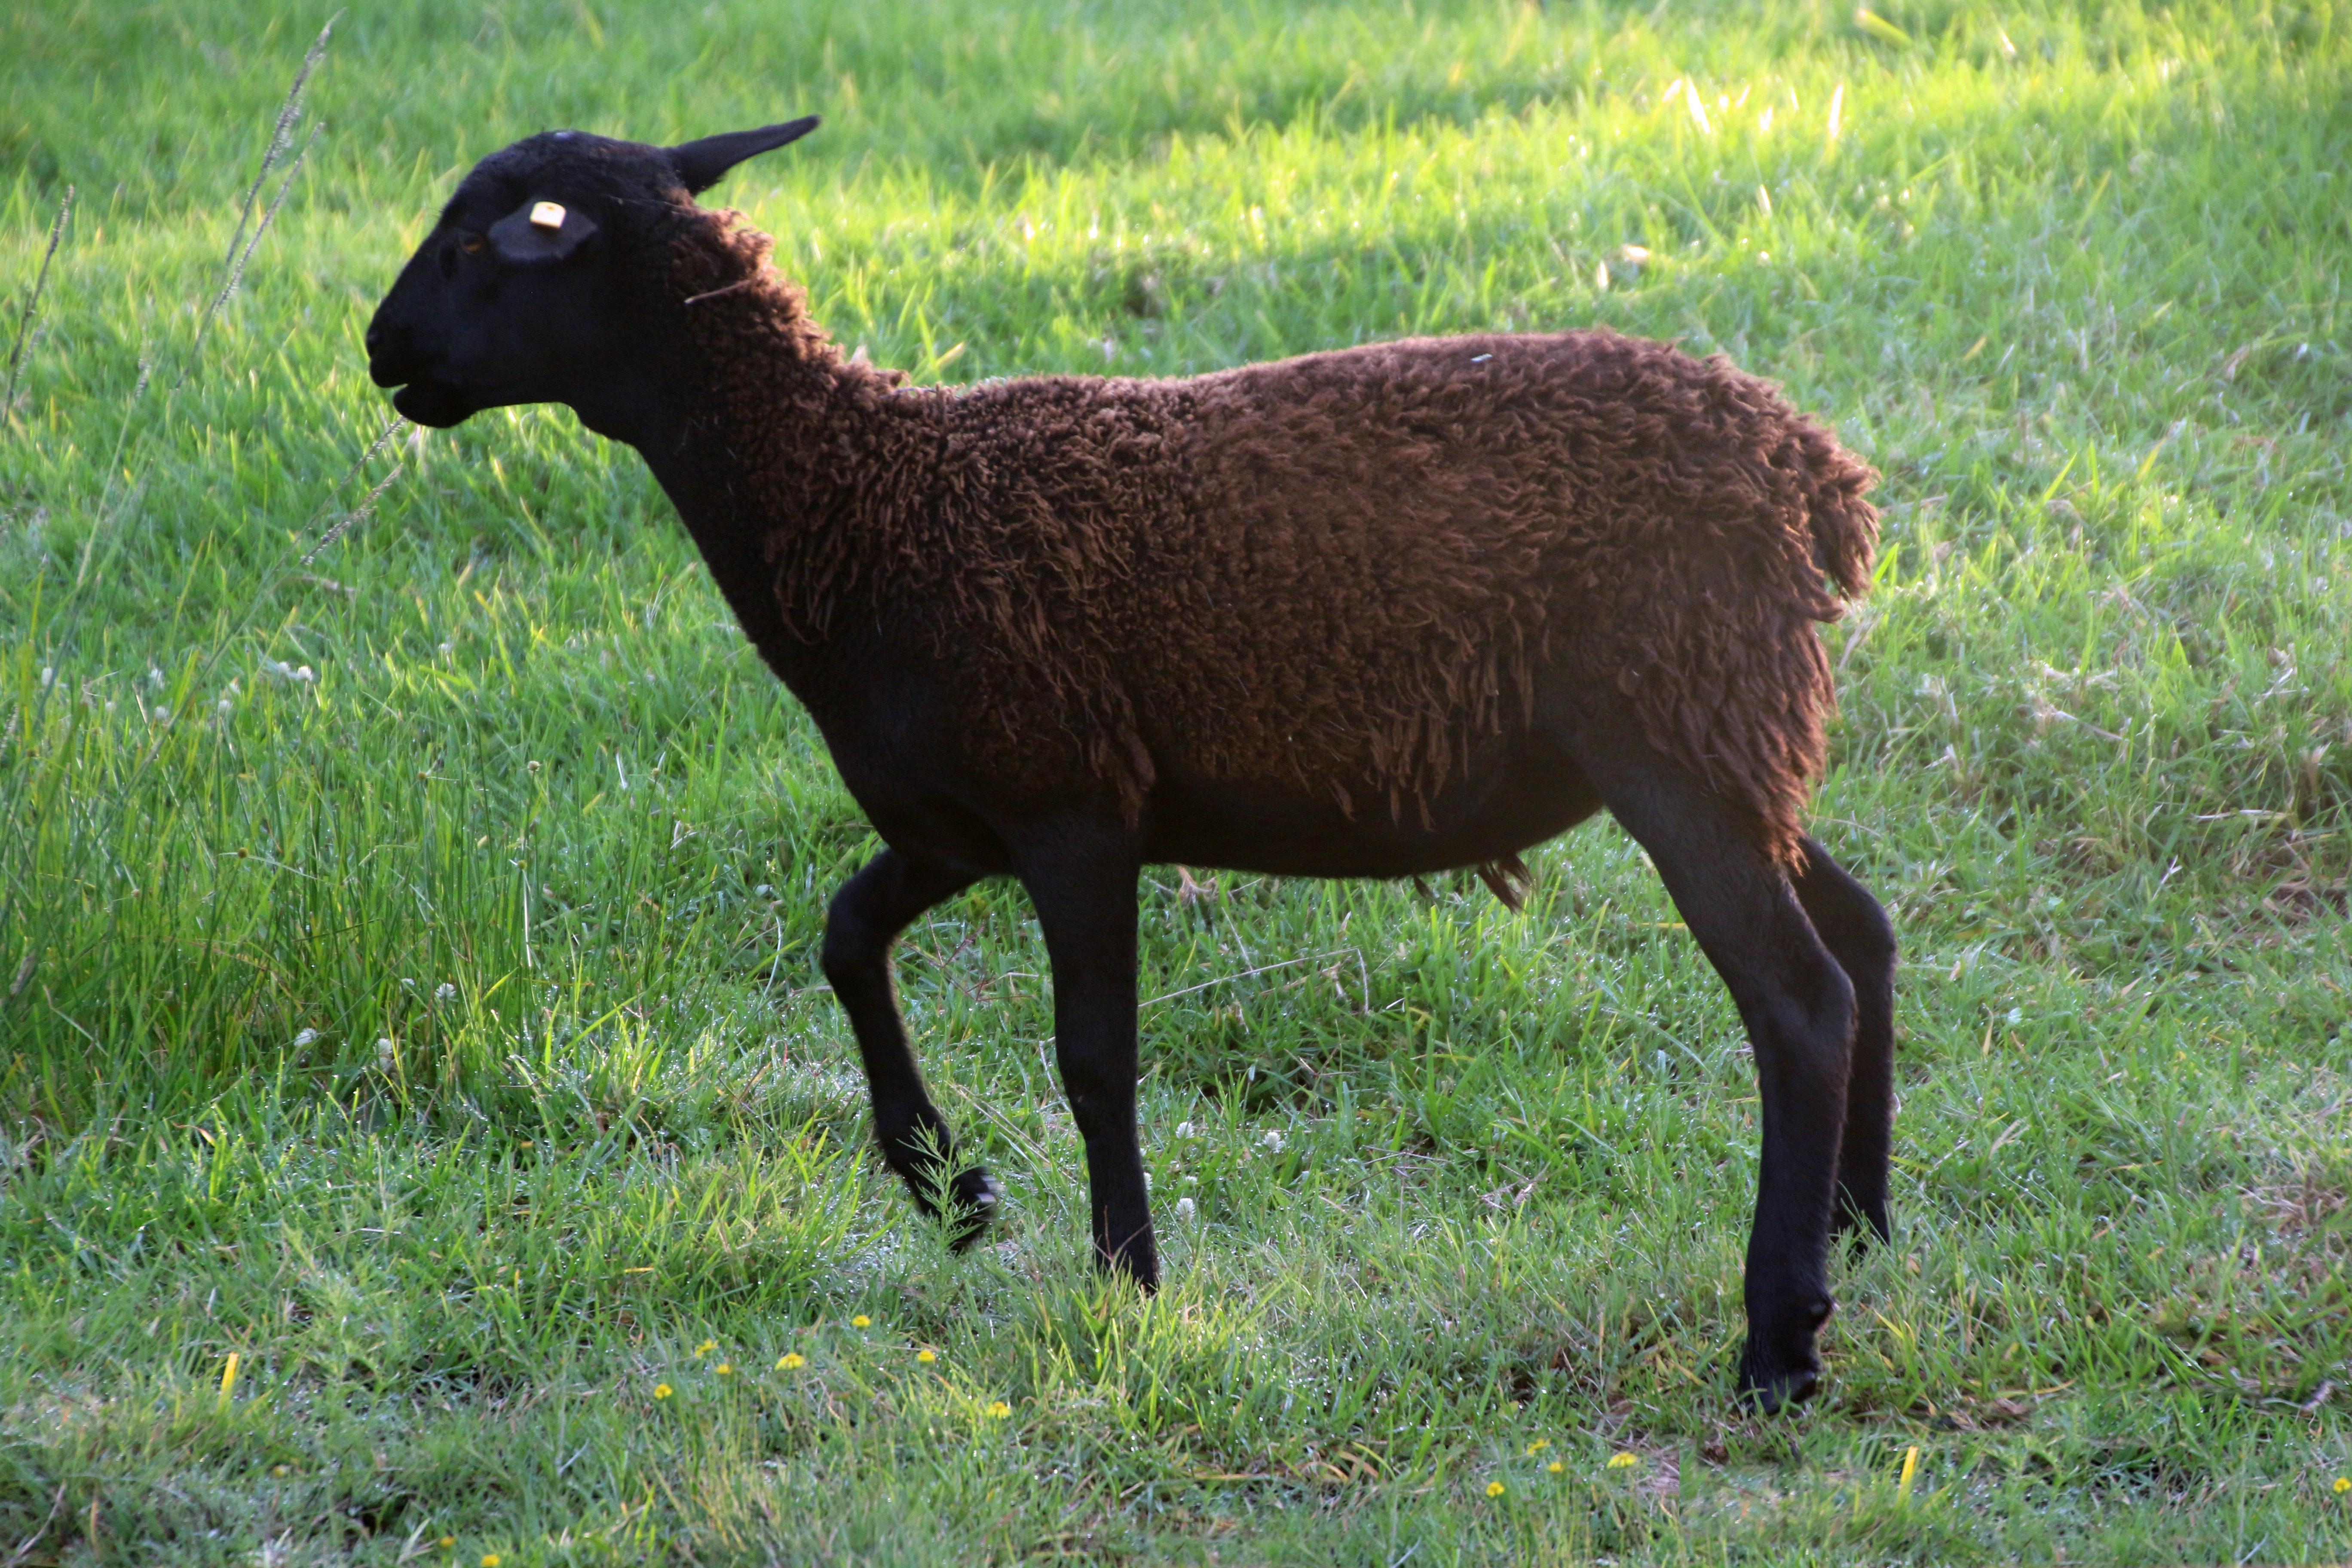 Black sheep in thew green field photo